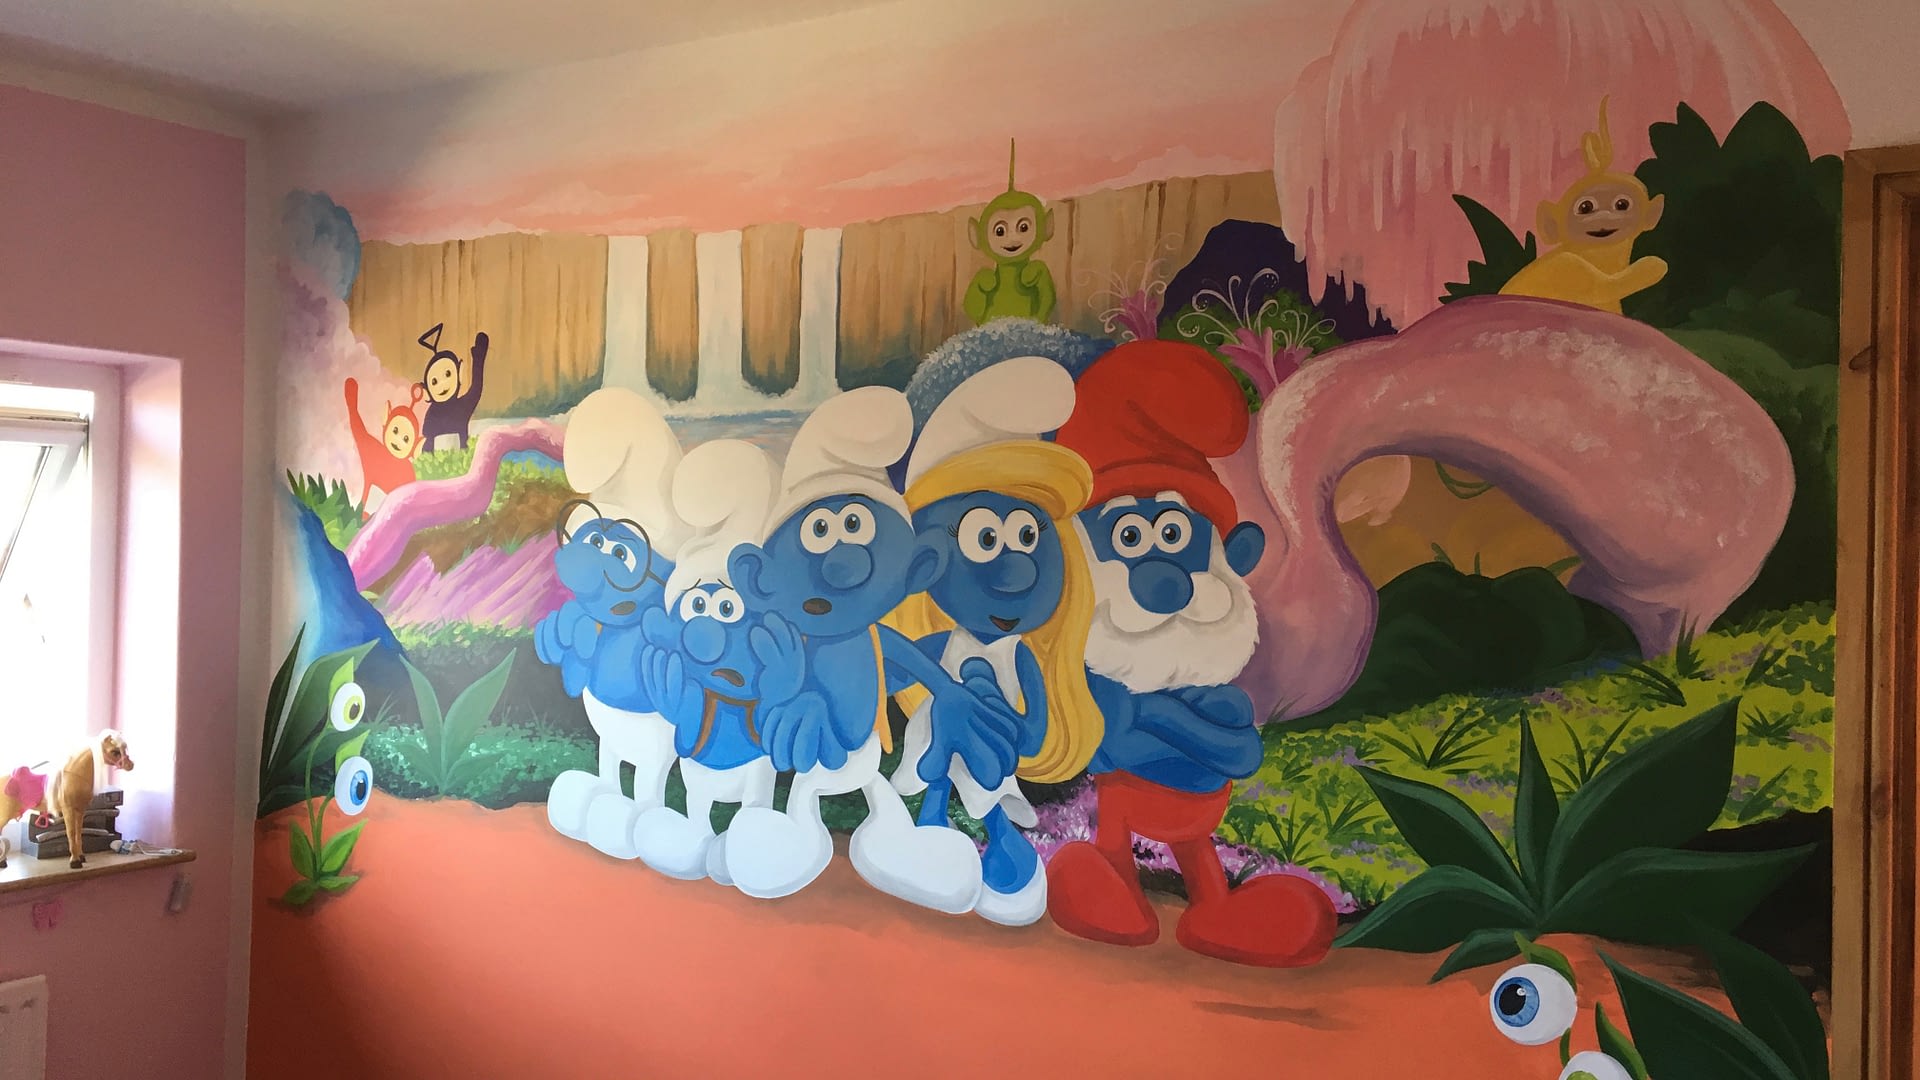 Smurph's Mural